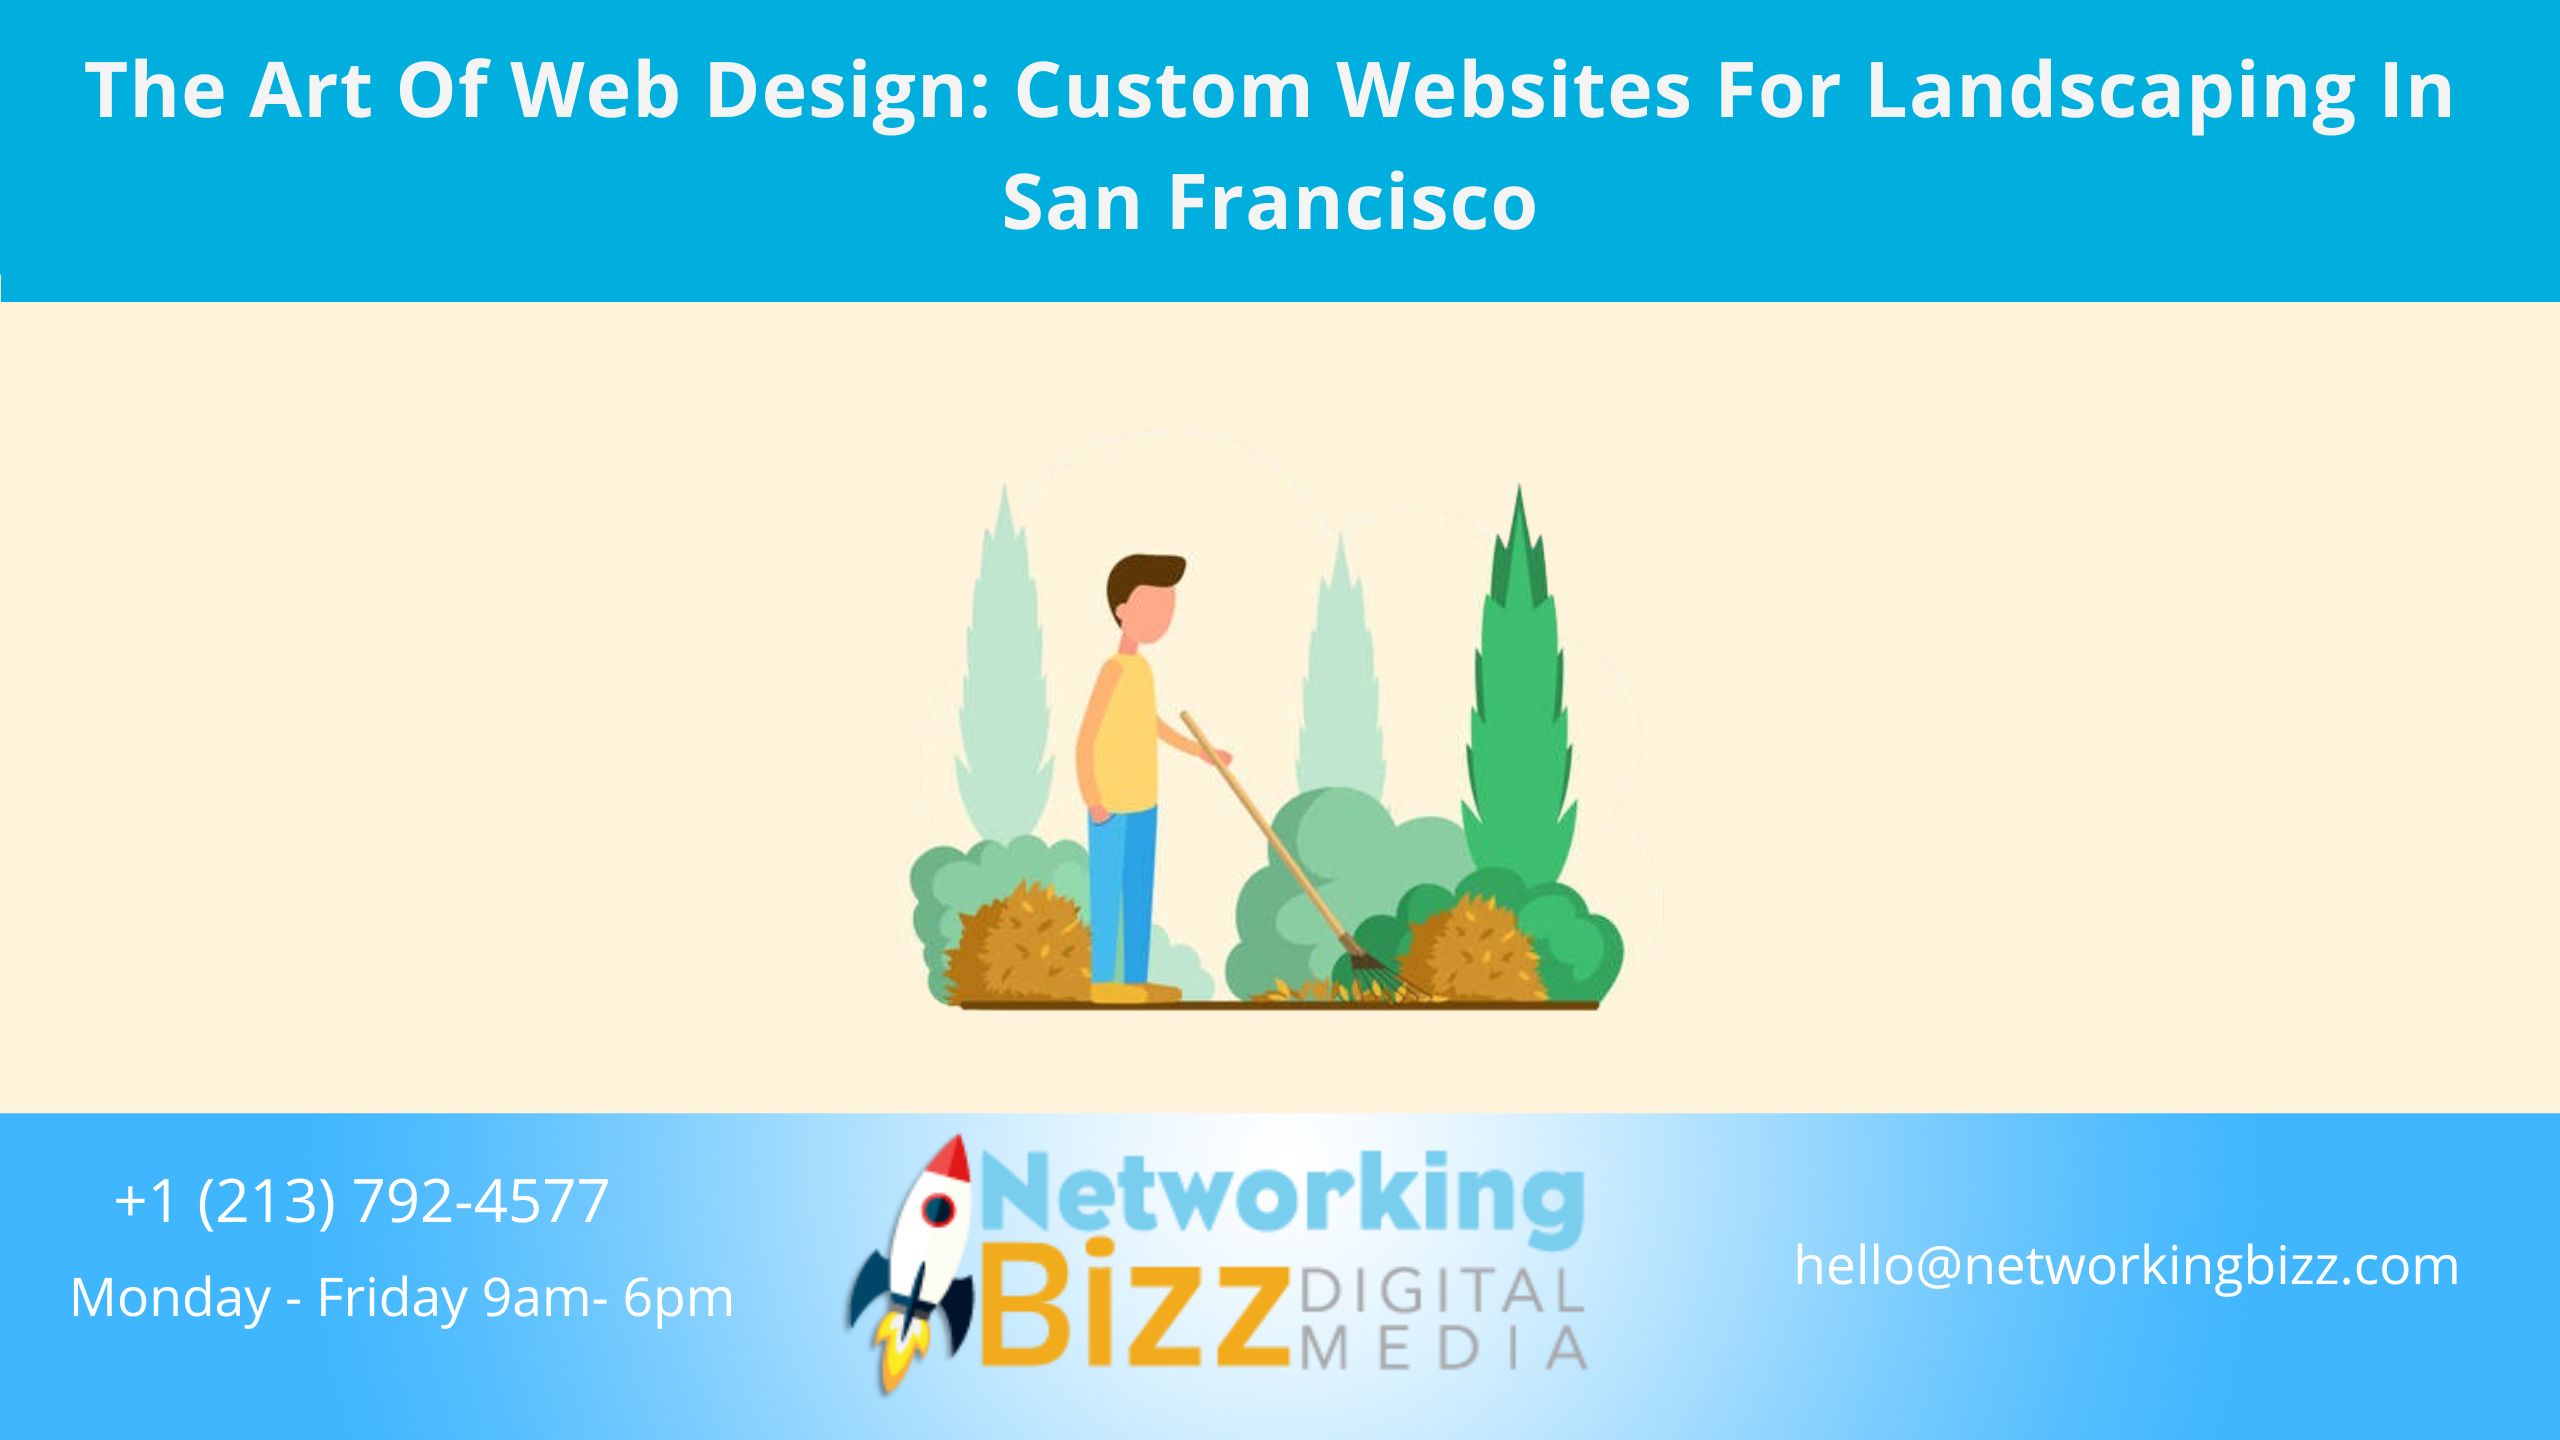 The Art Of Web Design: Custom Websites For Landscaping In San Francisco 